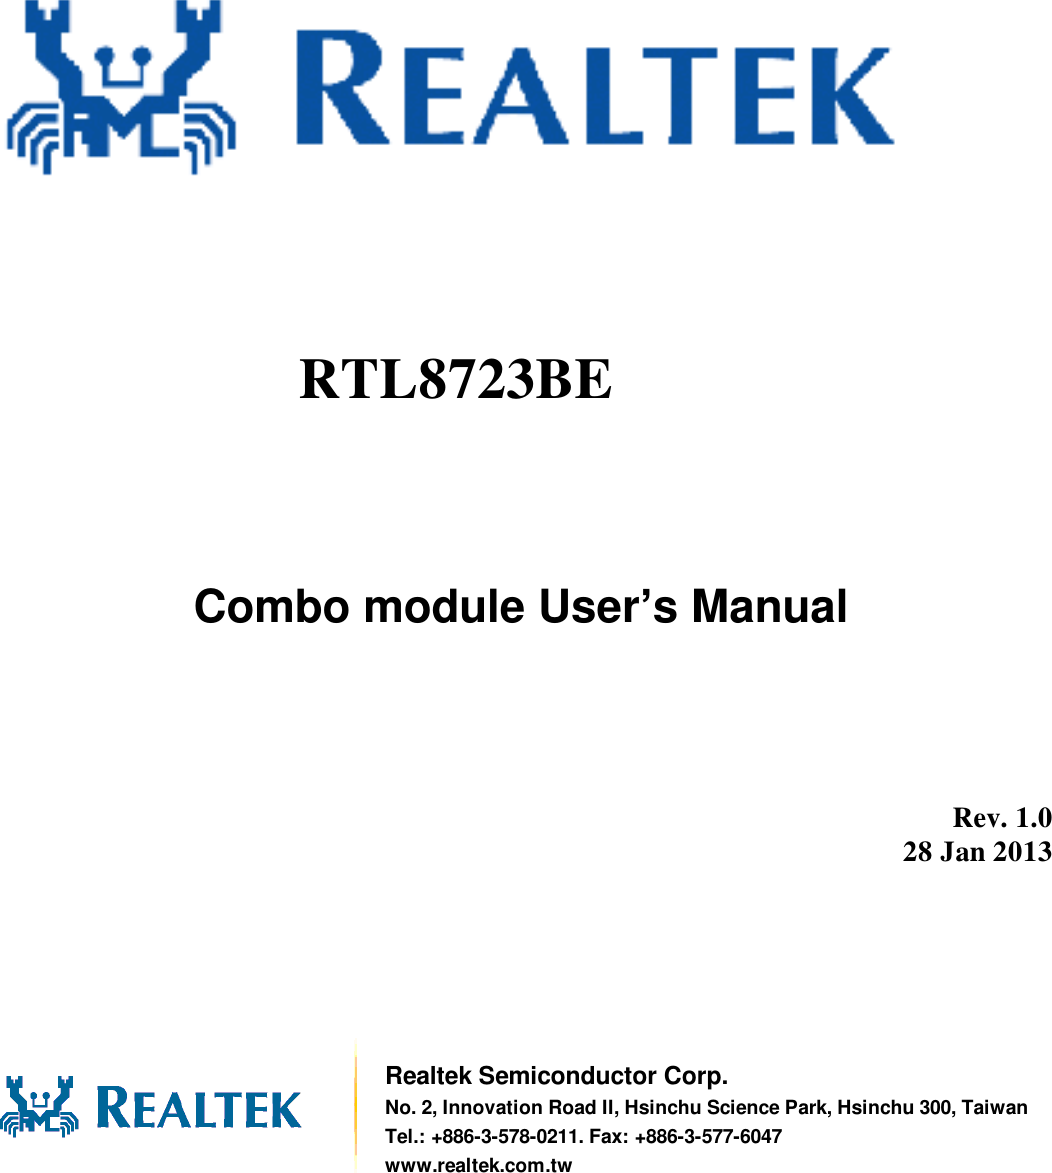                Combo module User’s Manual         Rev. 1.0 28 Jan 2013        Realtek Semiconductor Corp. No. 2, Innovation Road II, Hsinchu Science Park, Hsinchu 300, Taiwan Tel.: +886-3-578-0211. Fax: +886-3-577-6047 www.realtek.com.tw RTL8723BE  